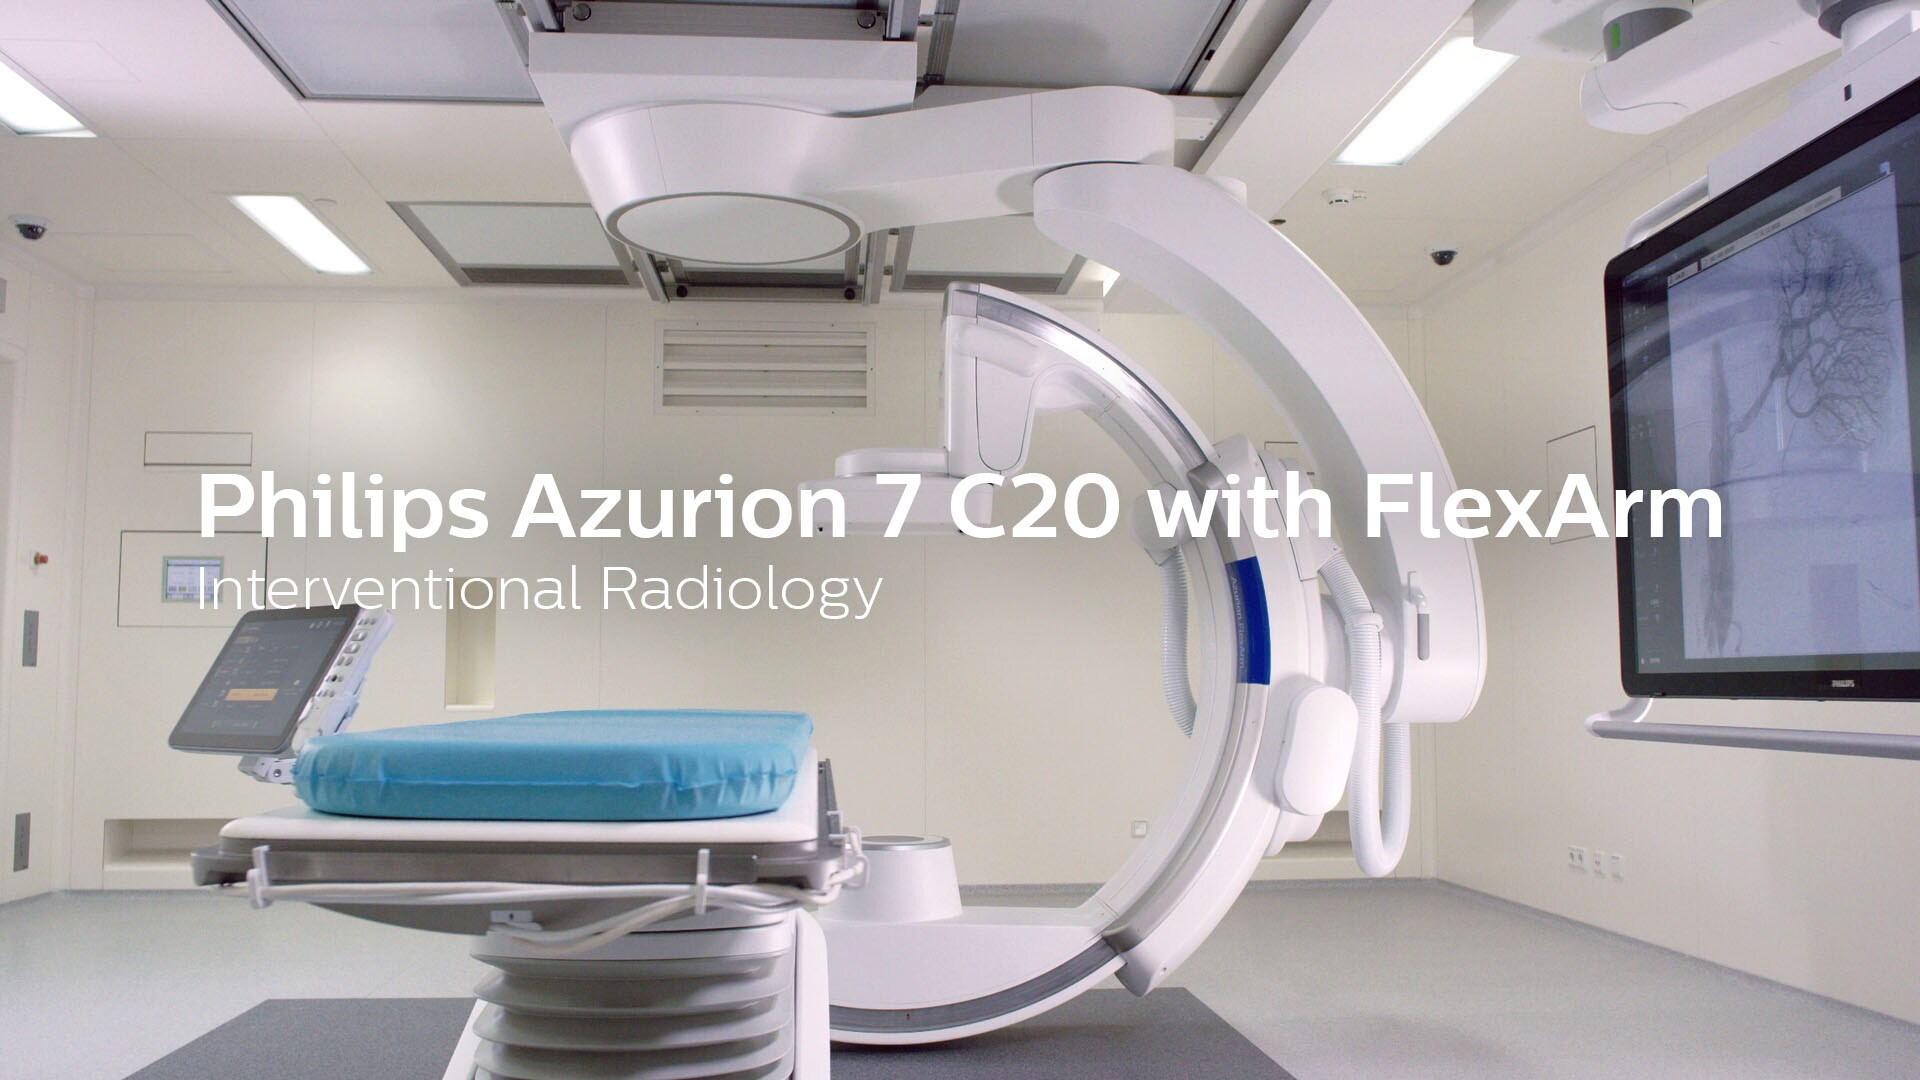 Philips Azurion 7 M20 with Flexarm interventional radiology